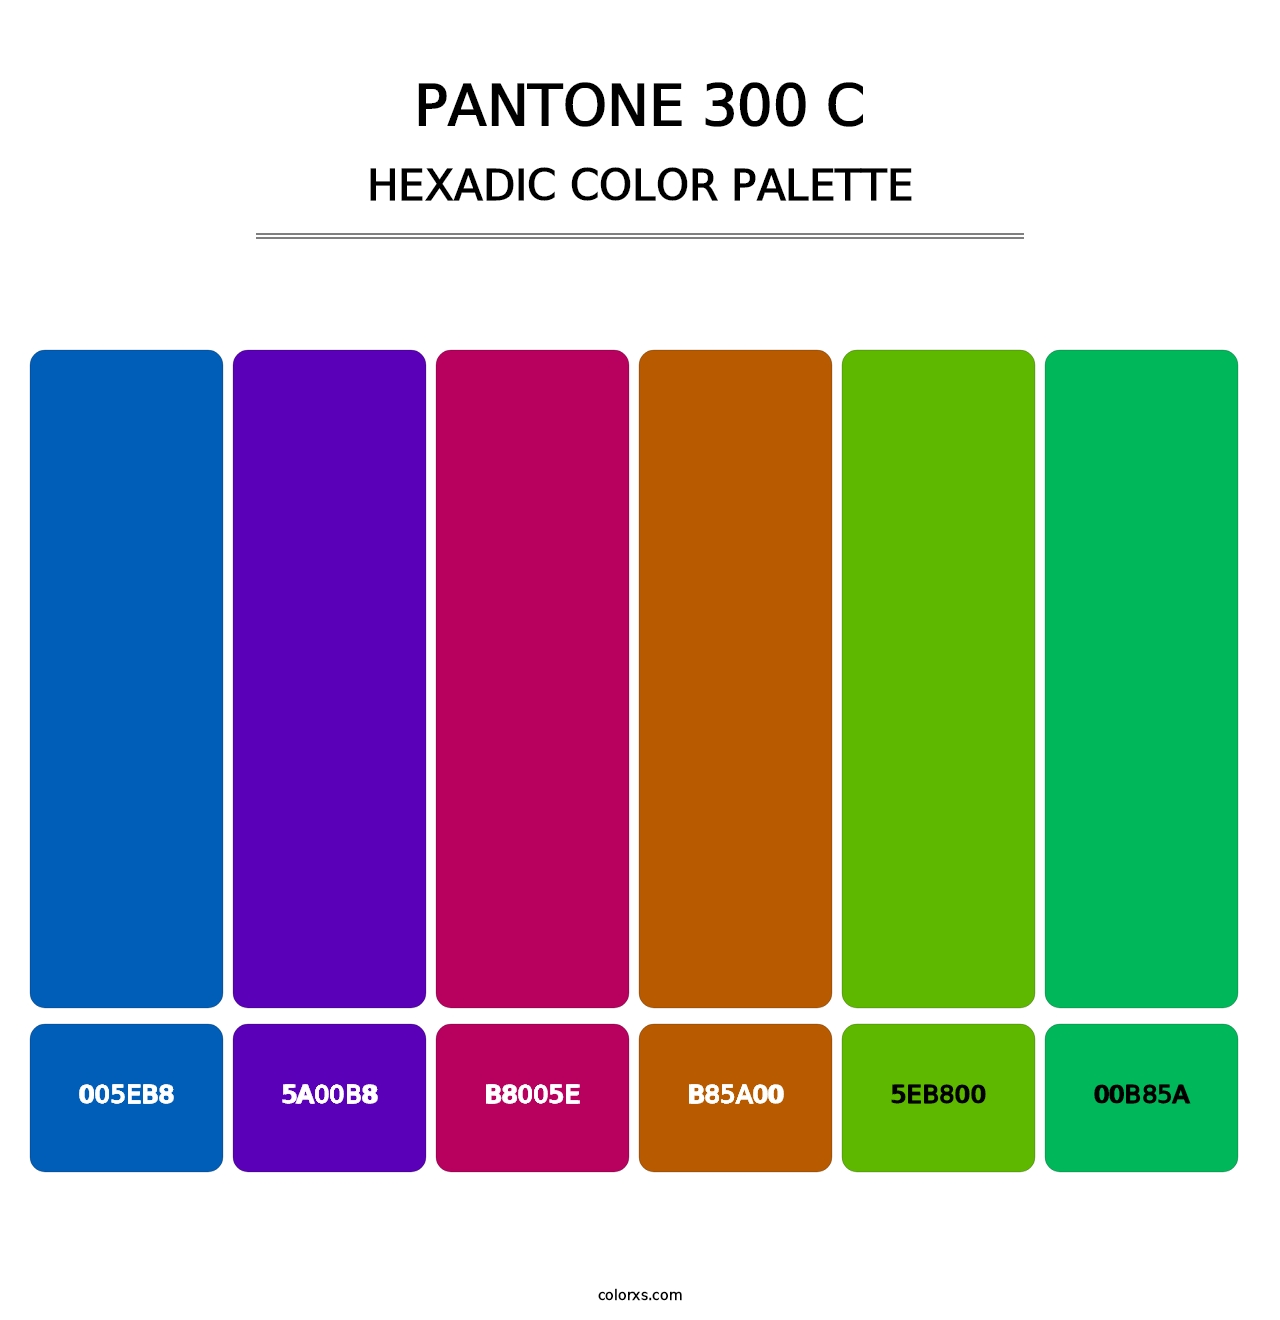 PANTONE 300 C - Hexadic Color Palette